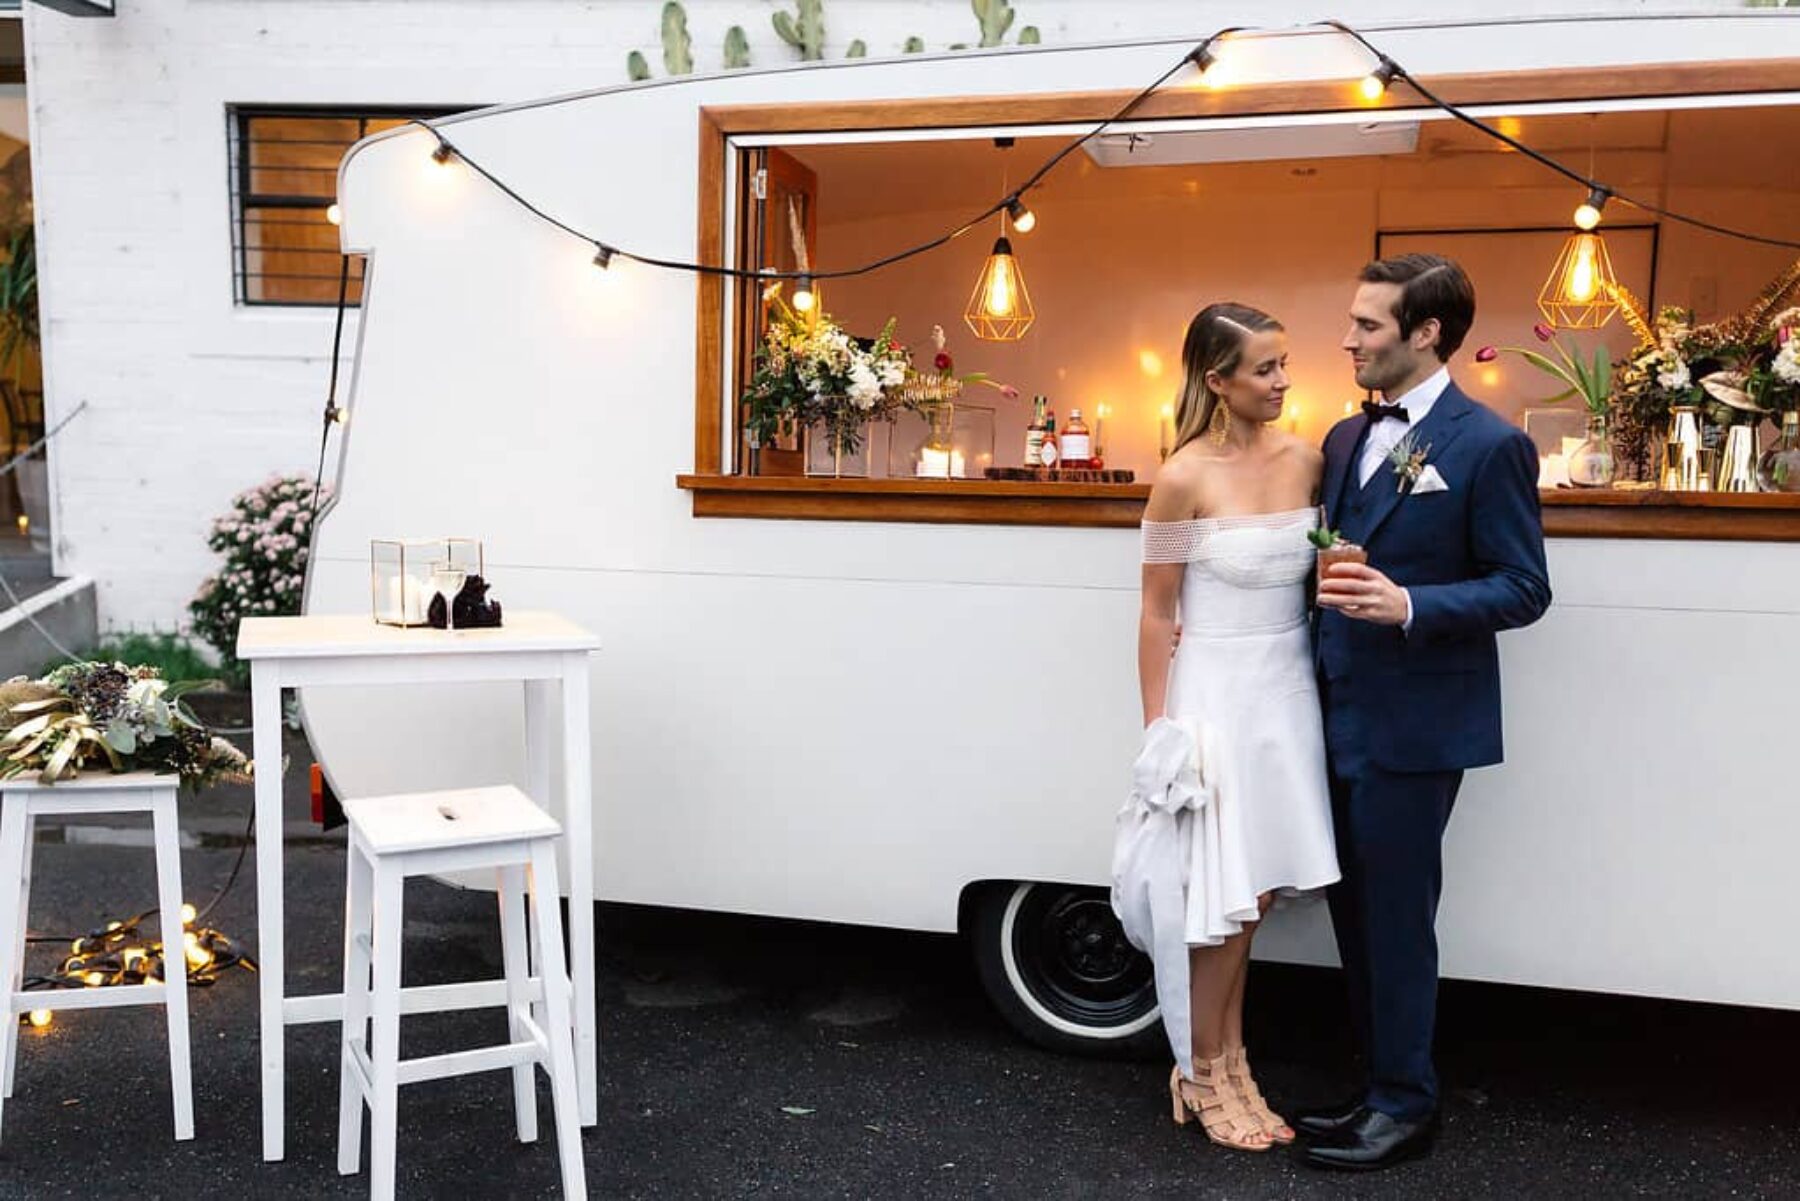 vintage caravan mobile wedding bar